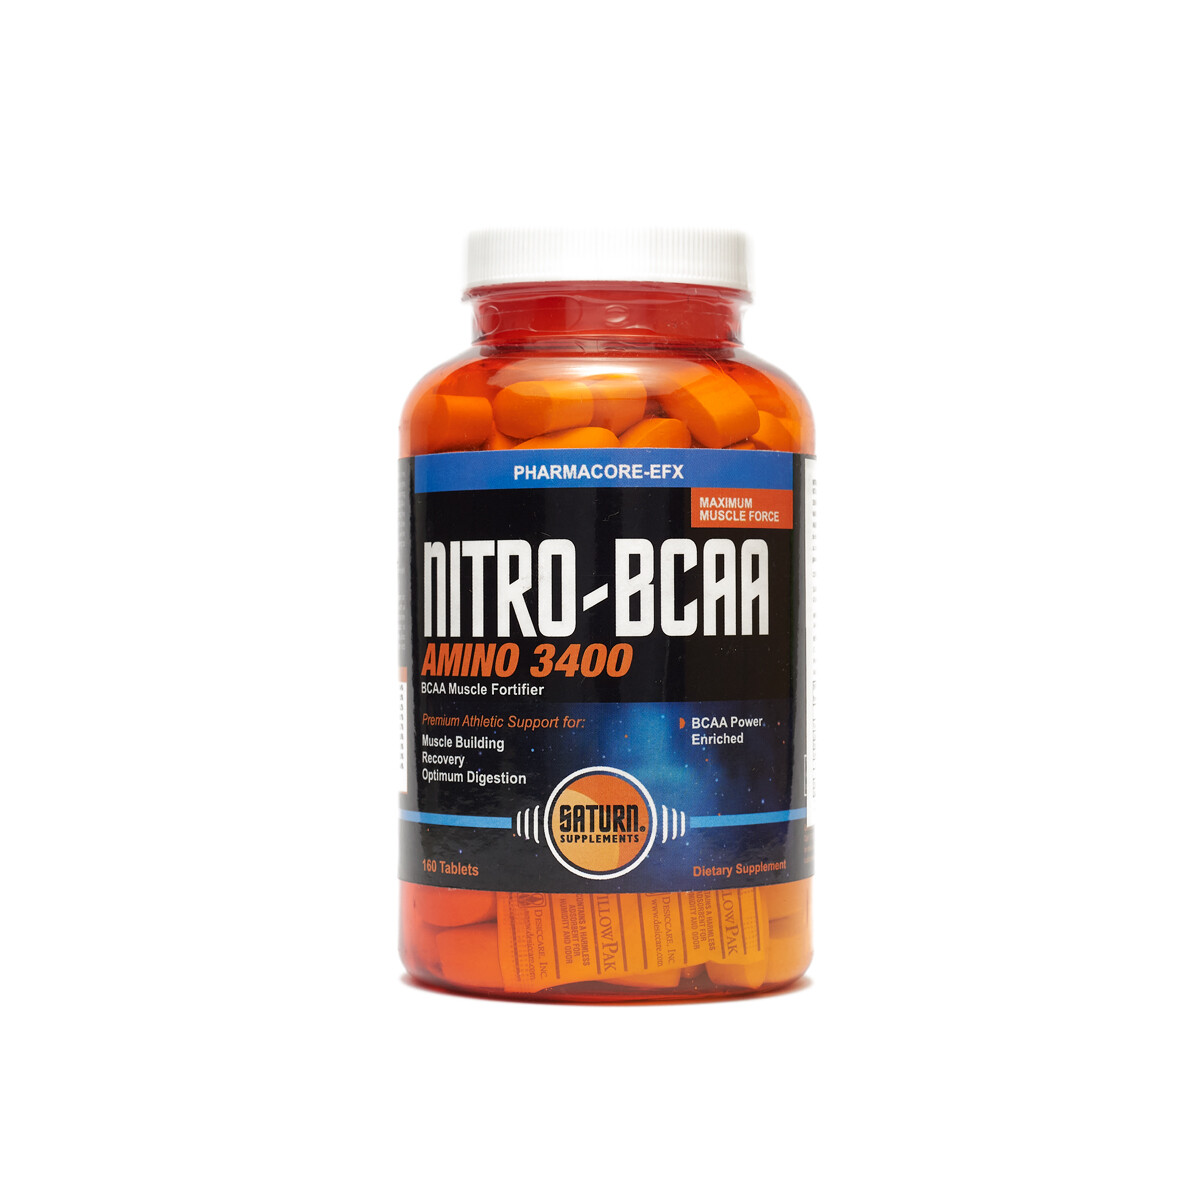 Saturn Supplements Nitro BCAA - 160 tablets 